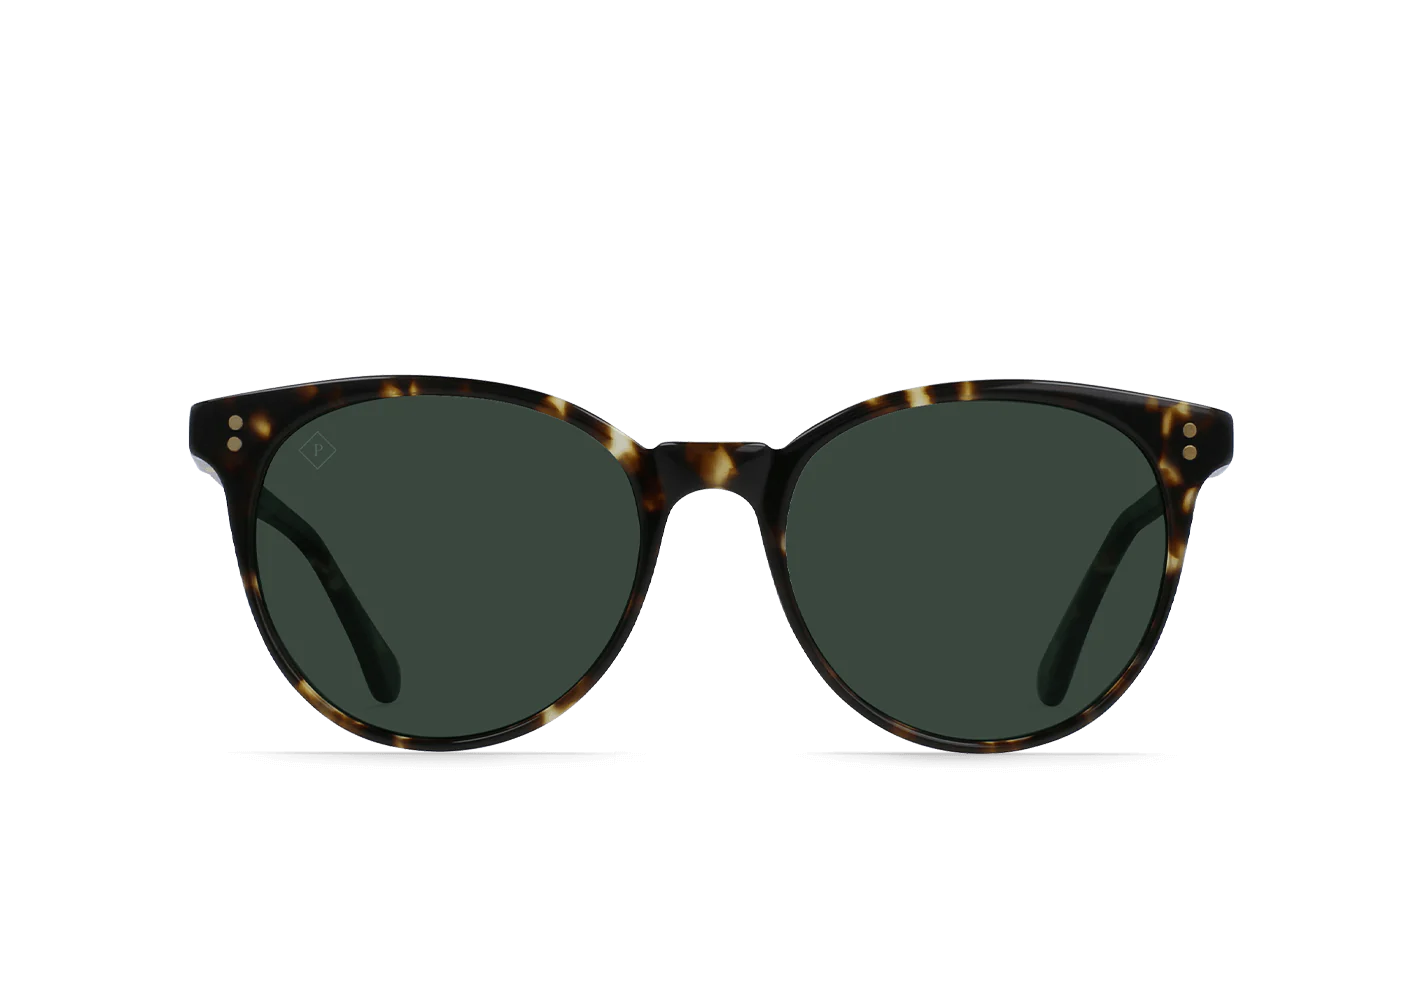 RAEN's Norie Women's Cat-Eye Sunglasses in Brindle Tortoise/Green Polarized